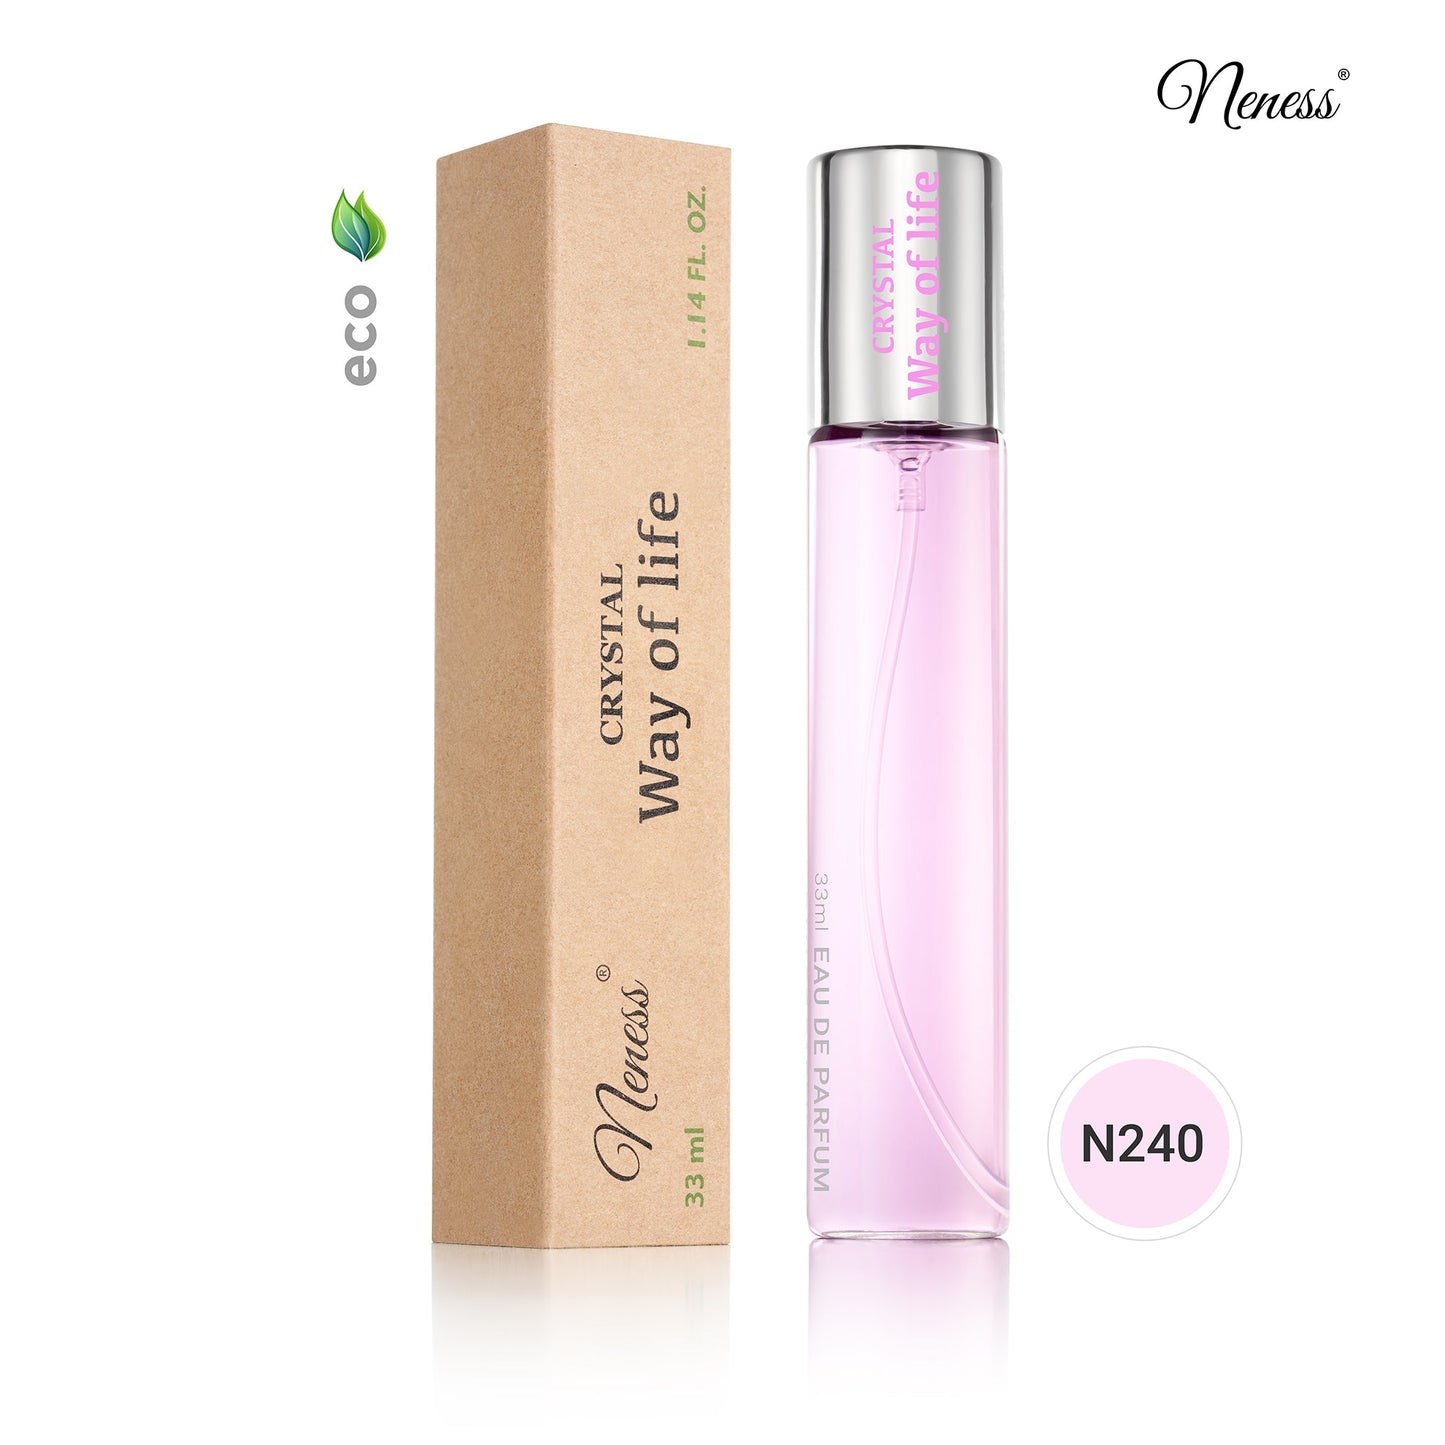 N240. Neness Crystal Way Of Life - 33 ml - Parfum voor vrouwen